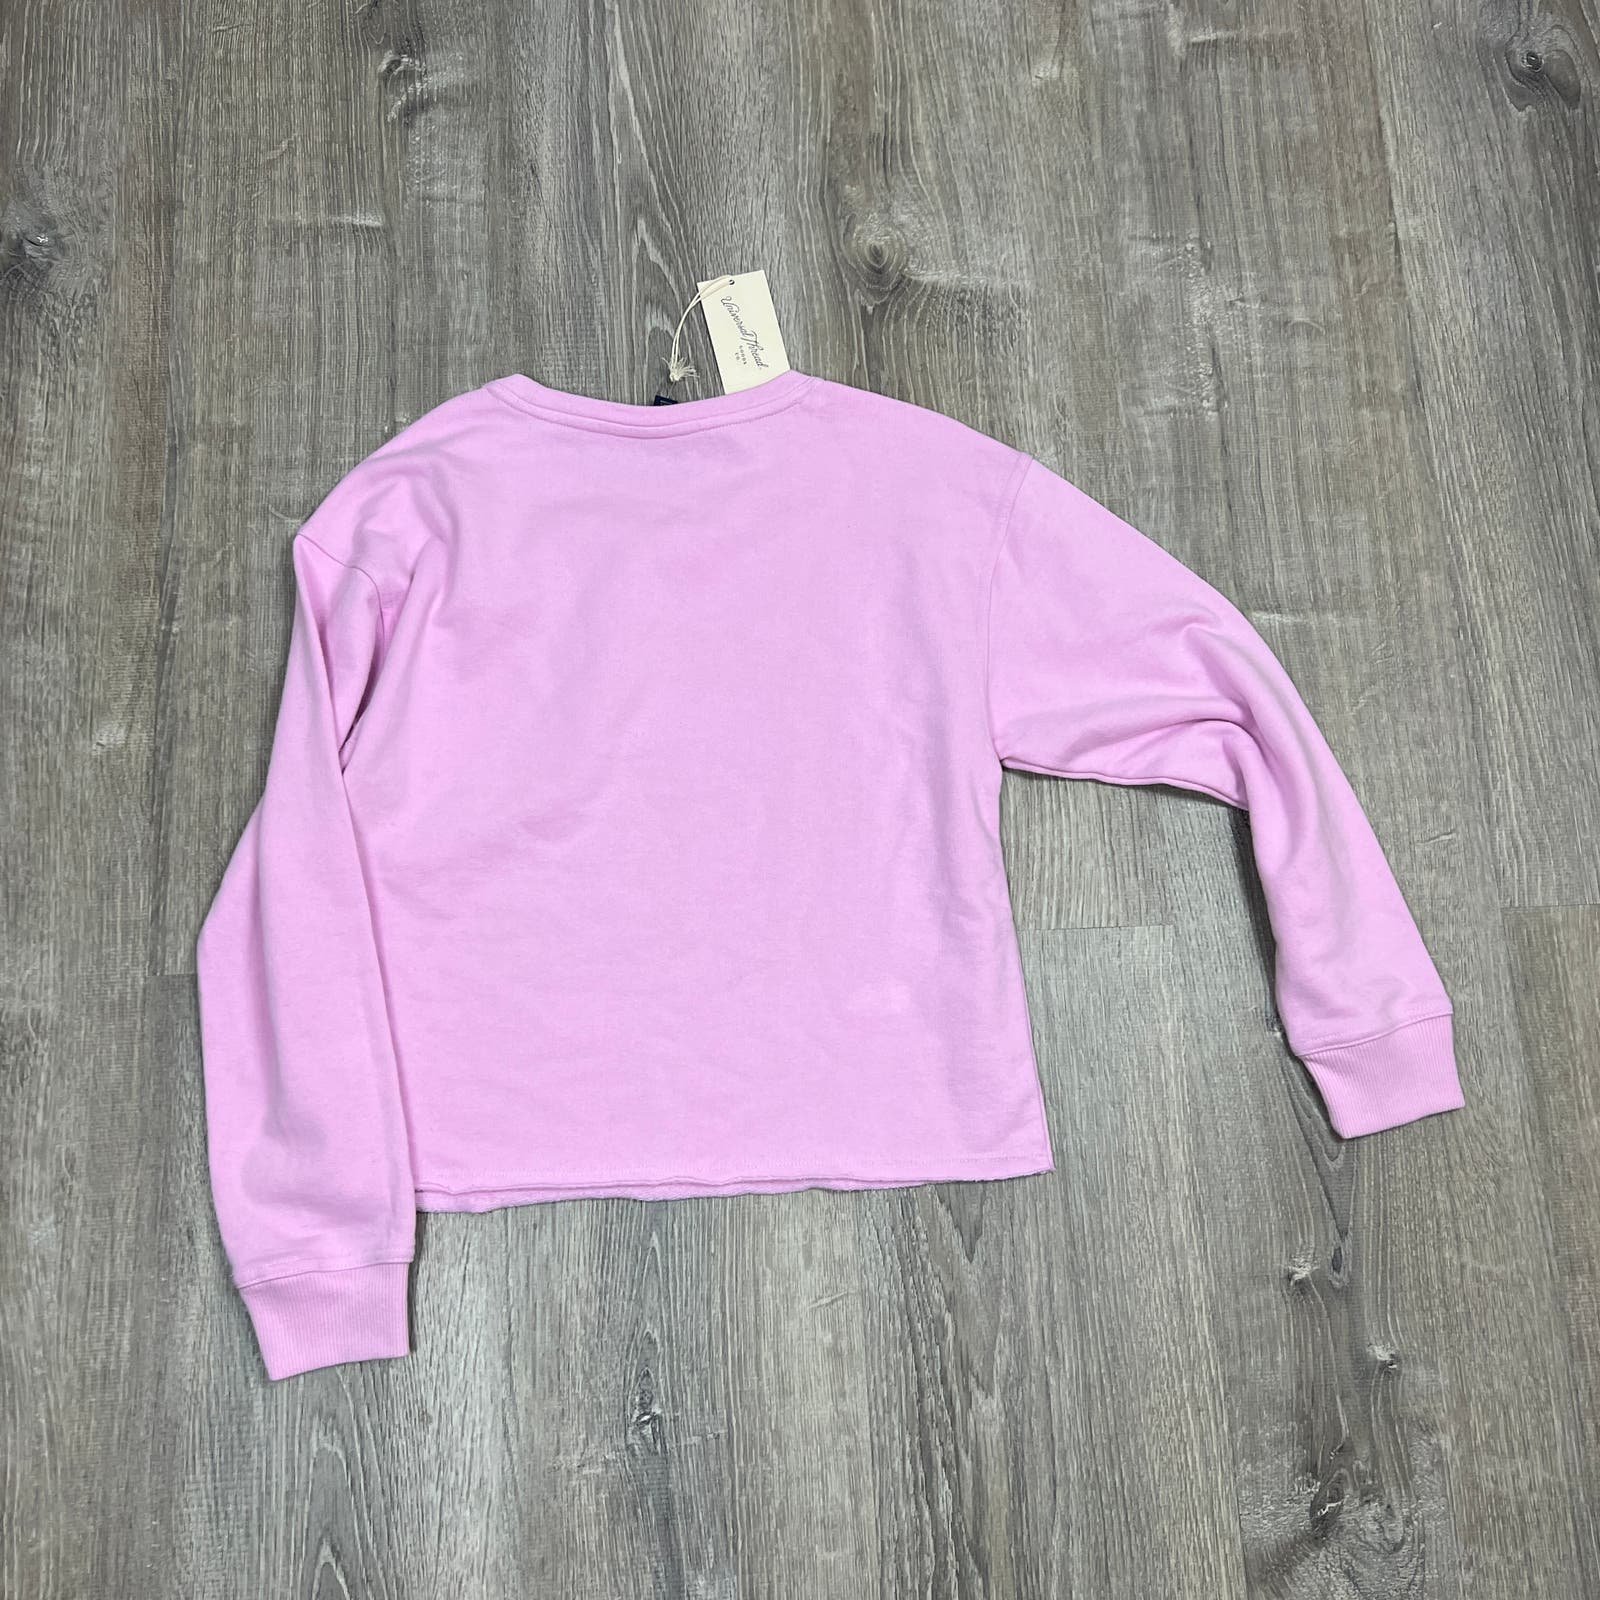 Elegant Universal Thread Women´s Light Pink French Terry Sweatshirt - XXL - NWT Pa8MIrASd best sale